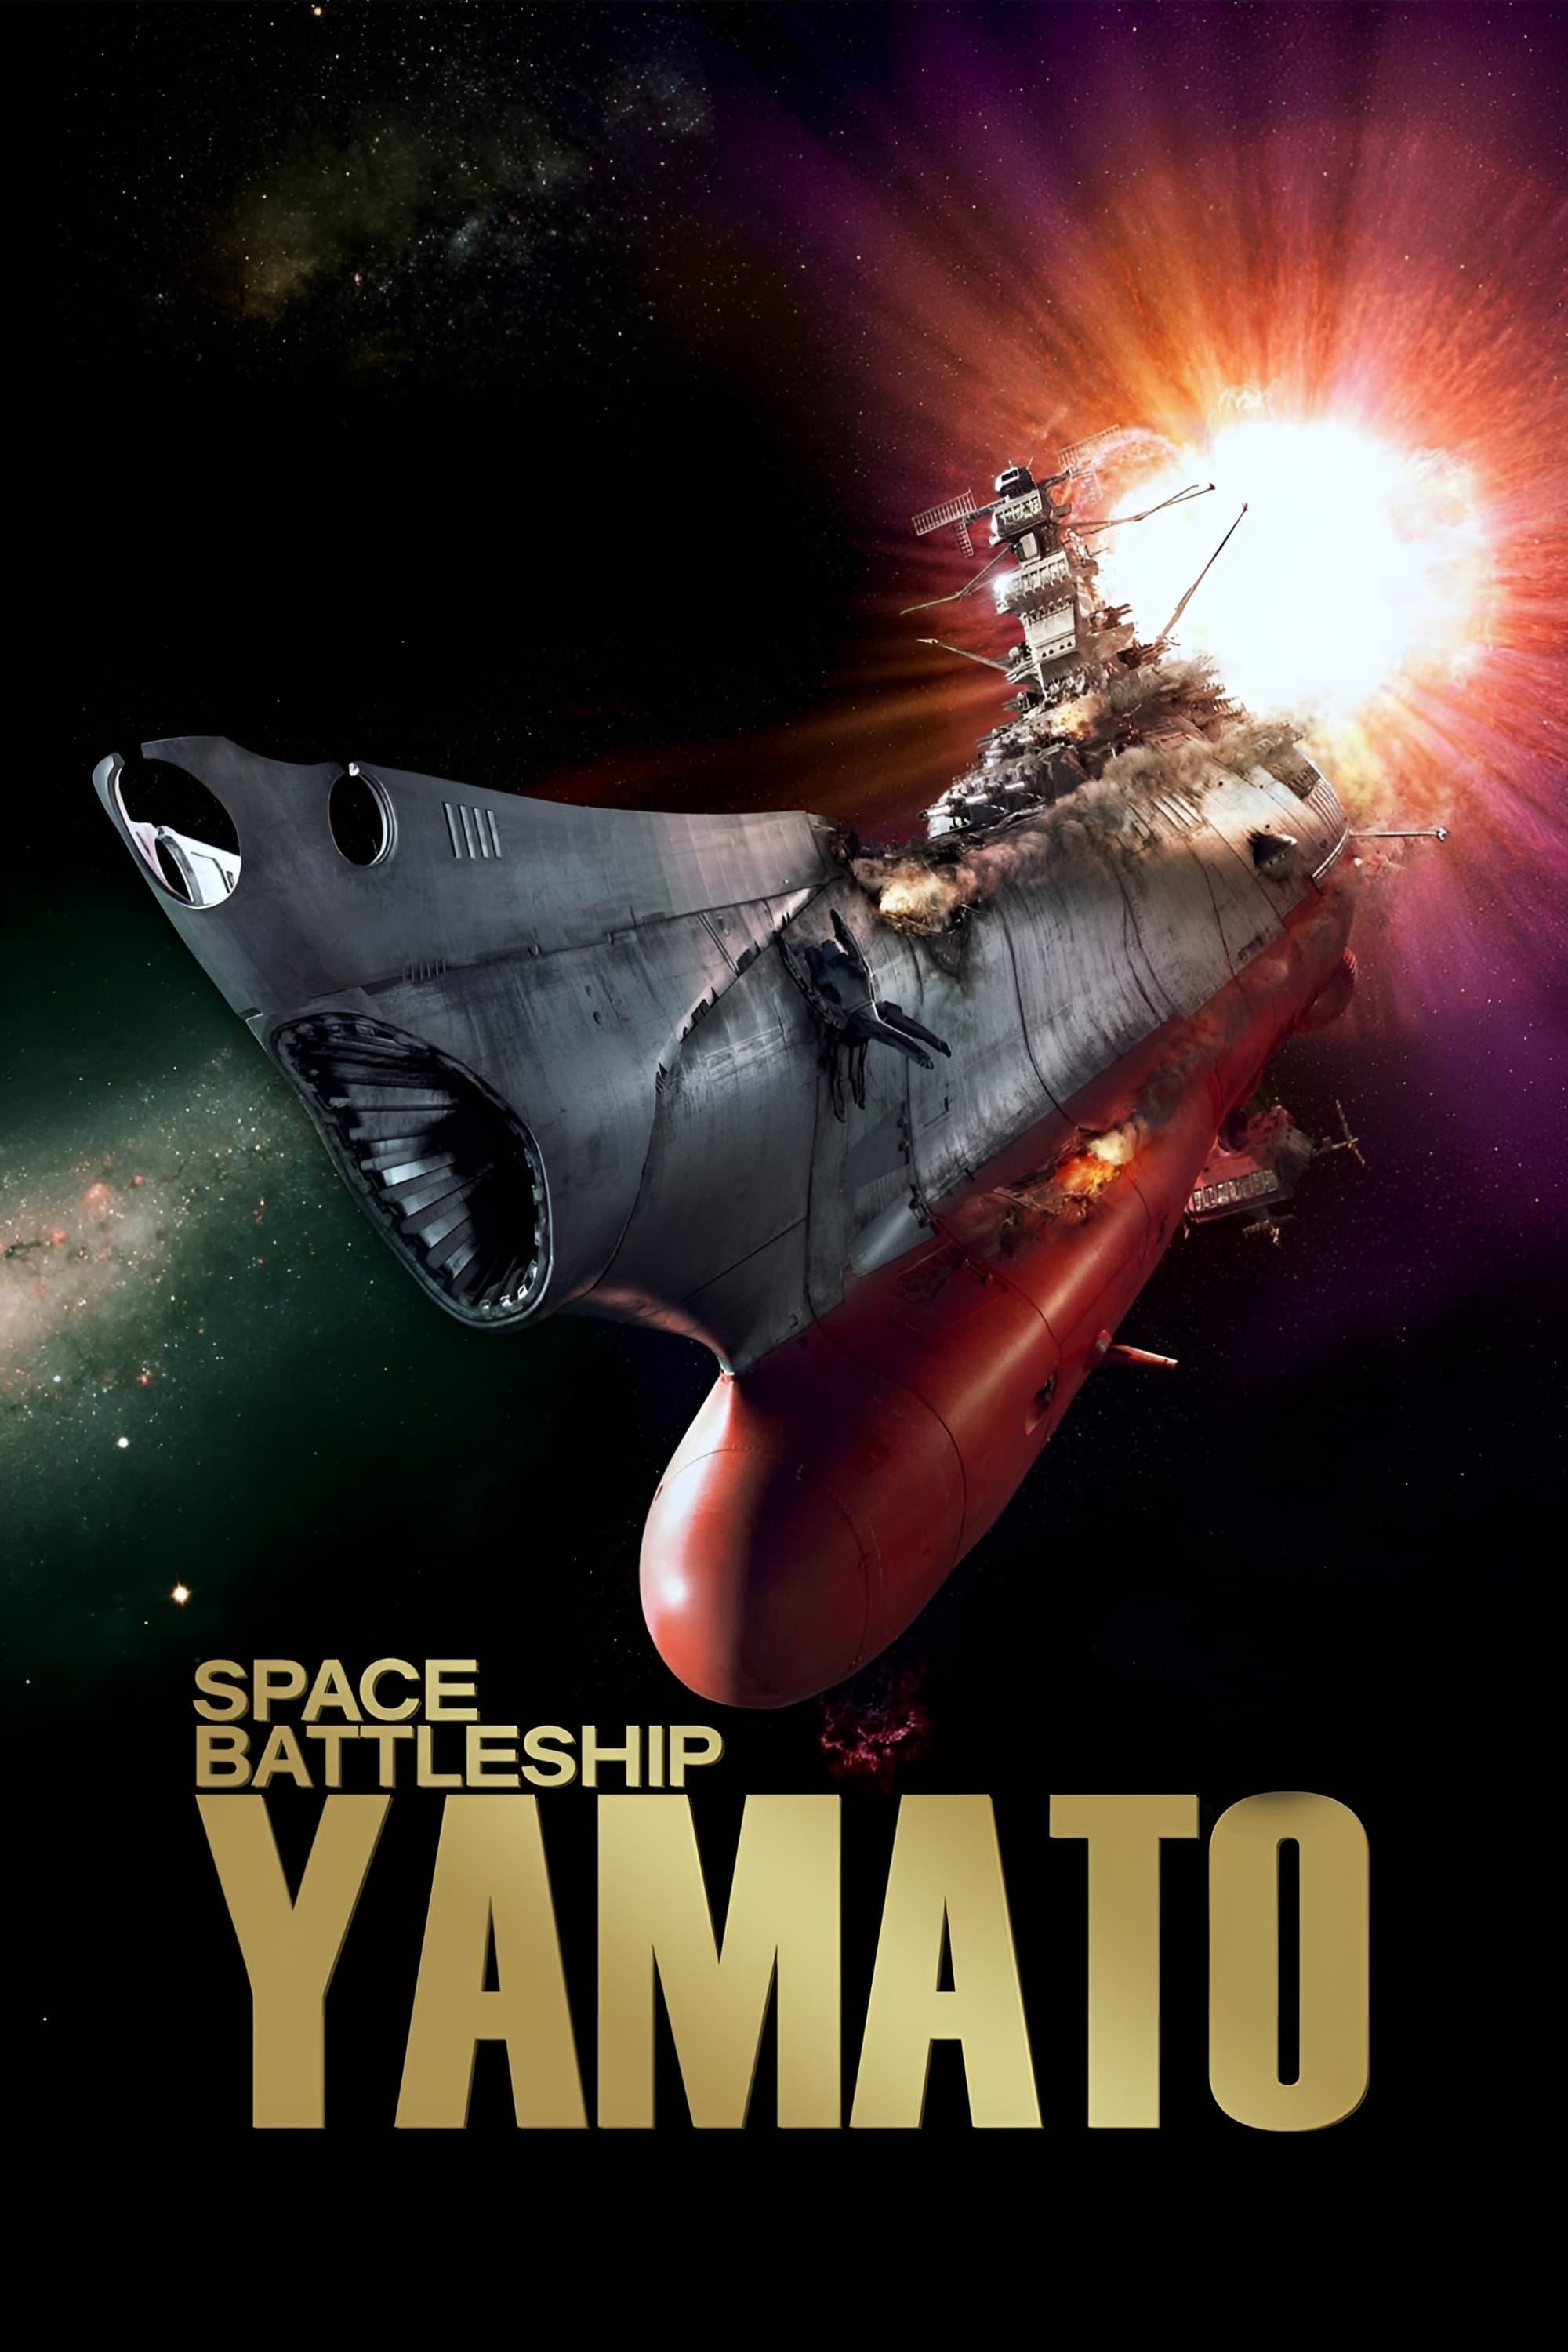 Space Battleship Yamato poster